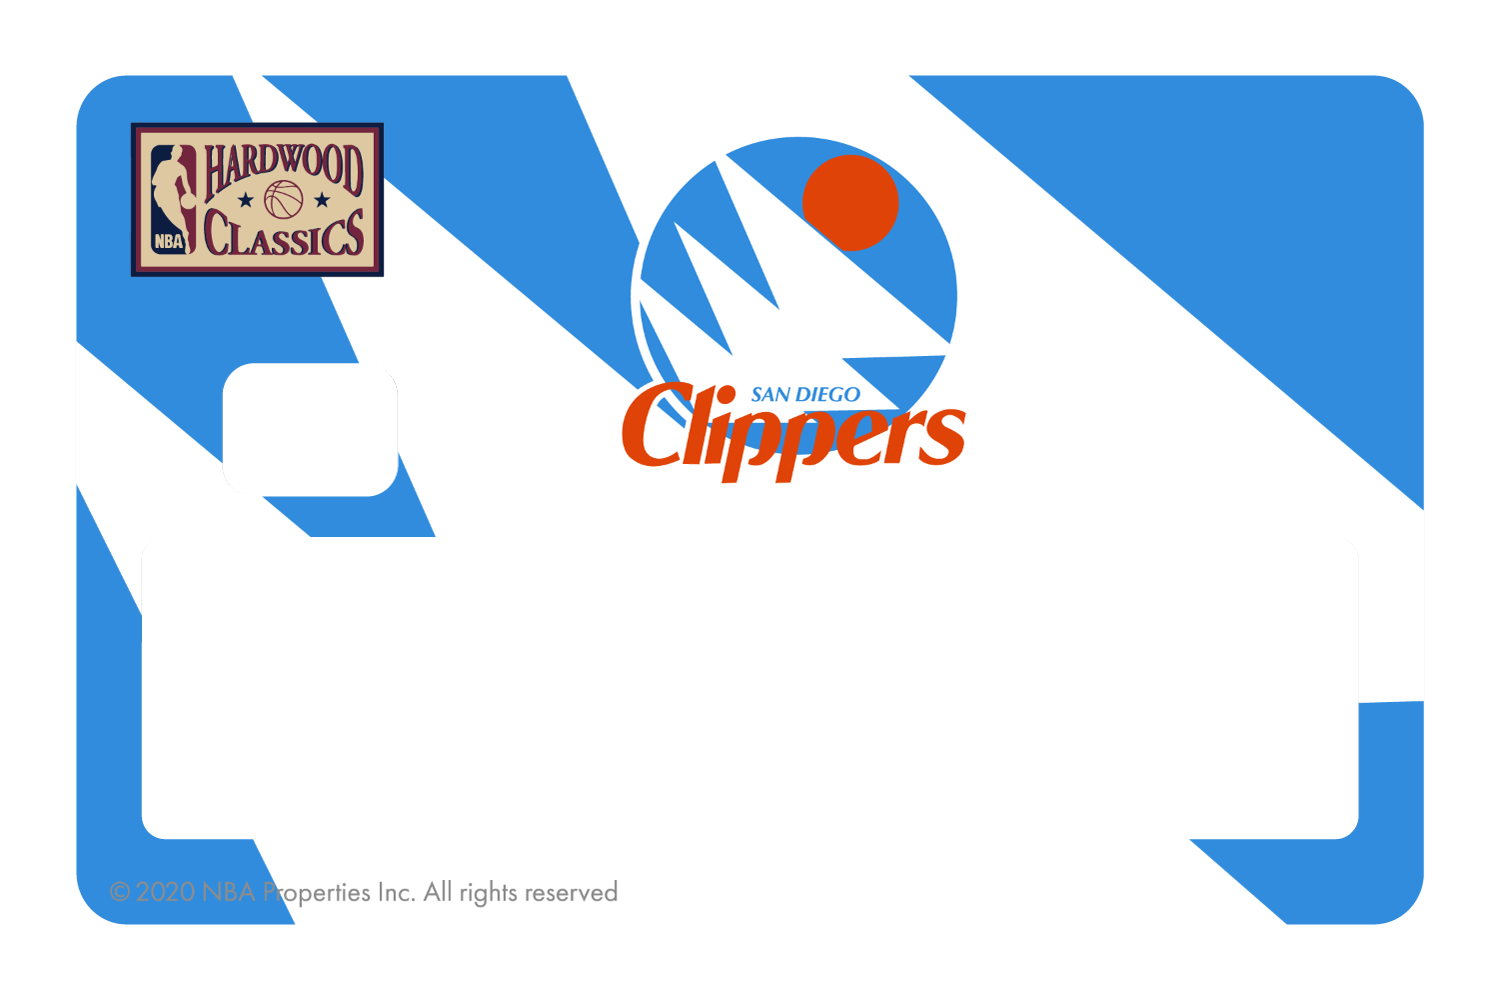 LA Clippers: Throwback Hardwood Classics